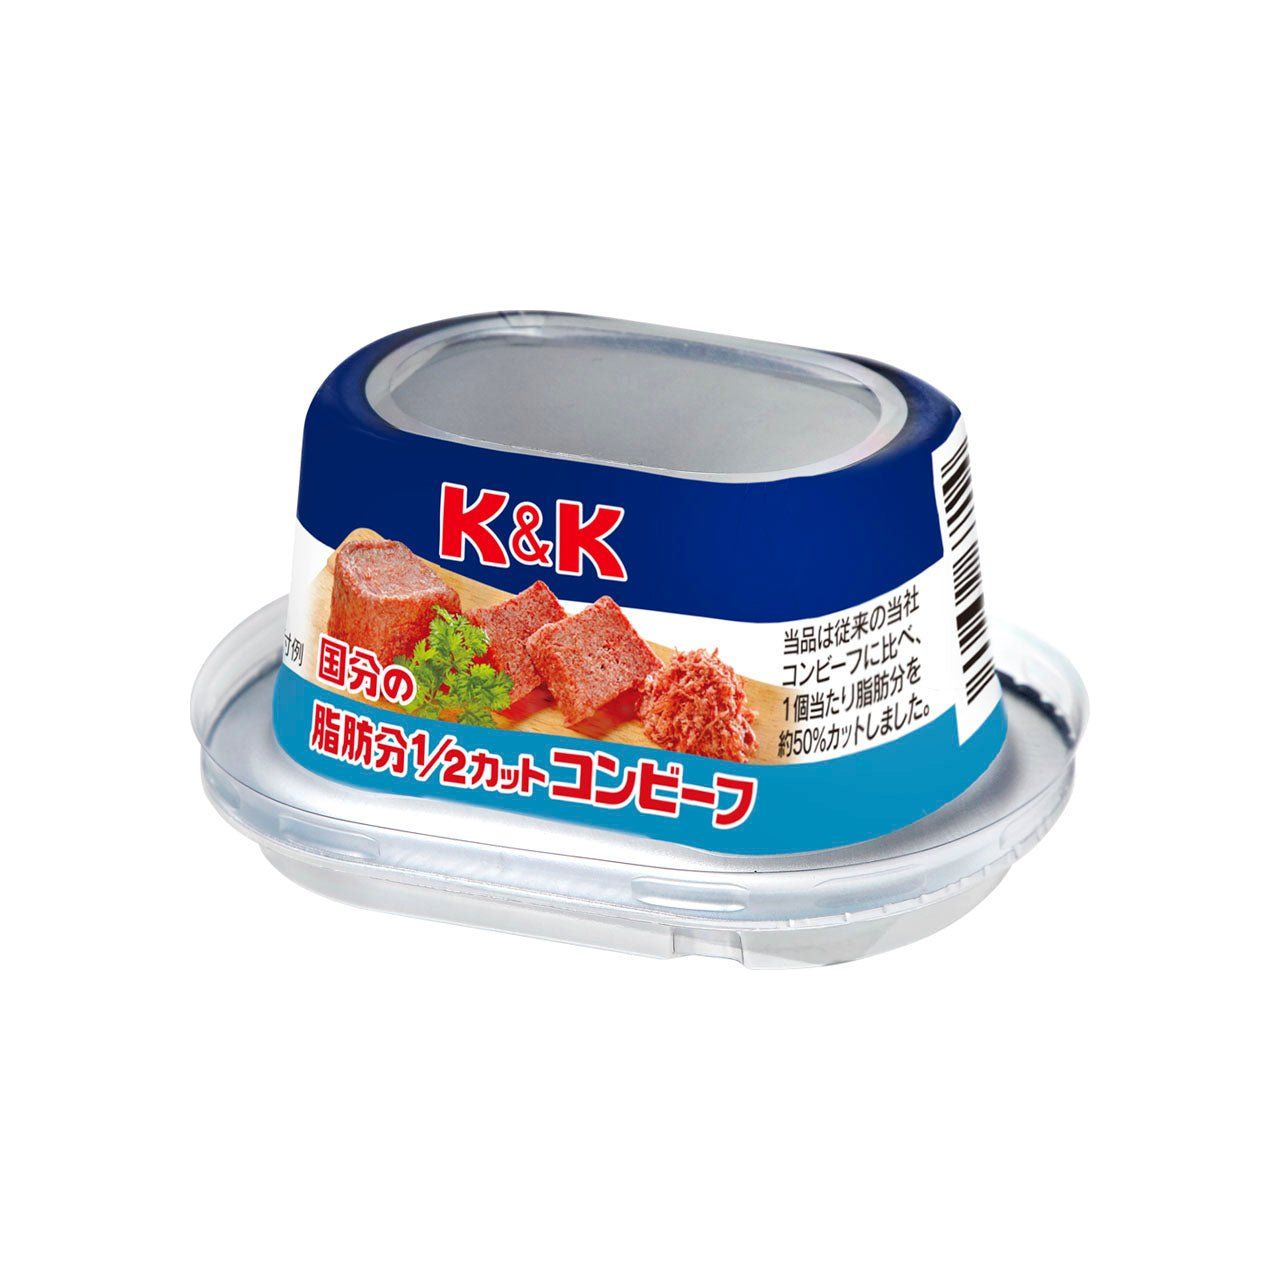 K&K Kokubu Fat 1/2 Cut Combbef